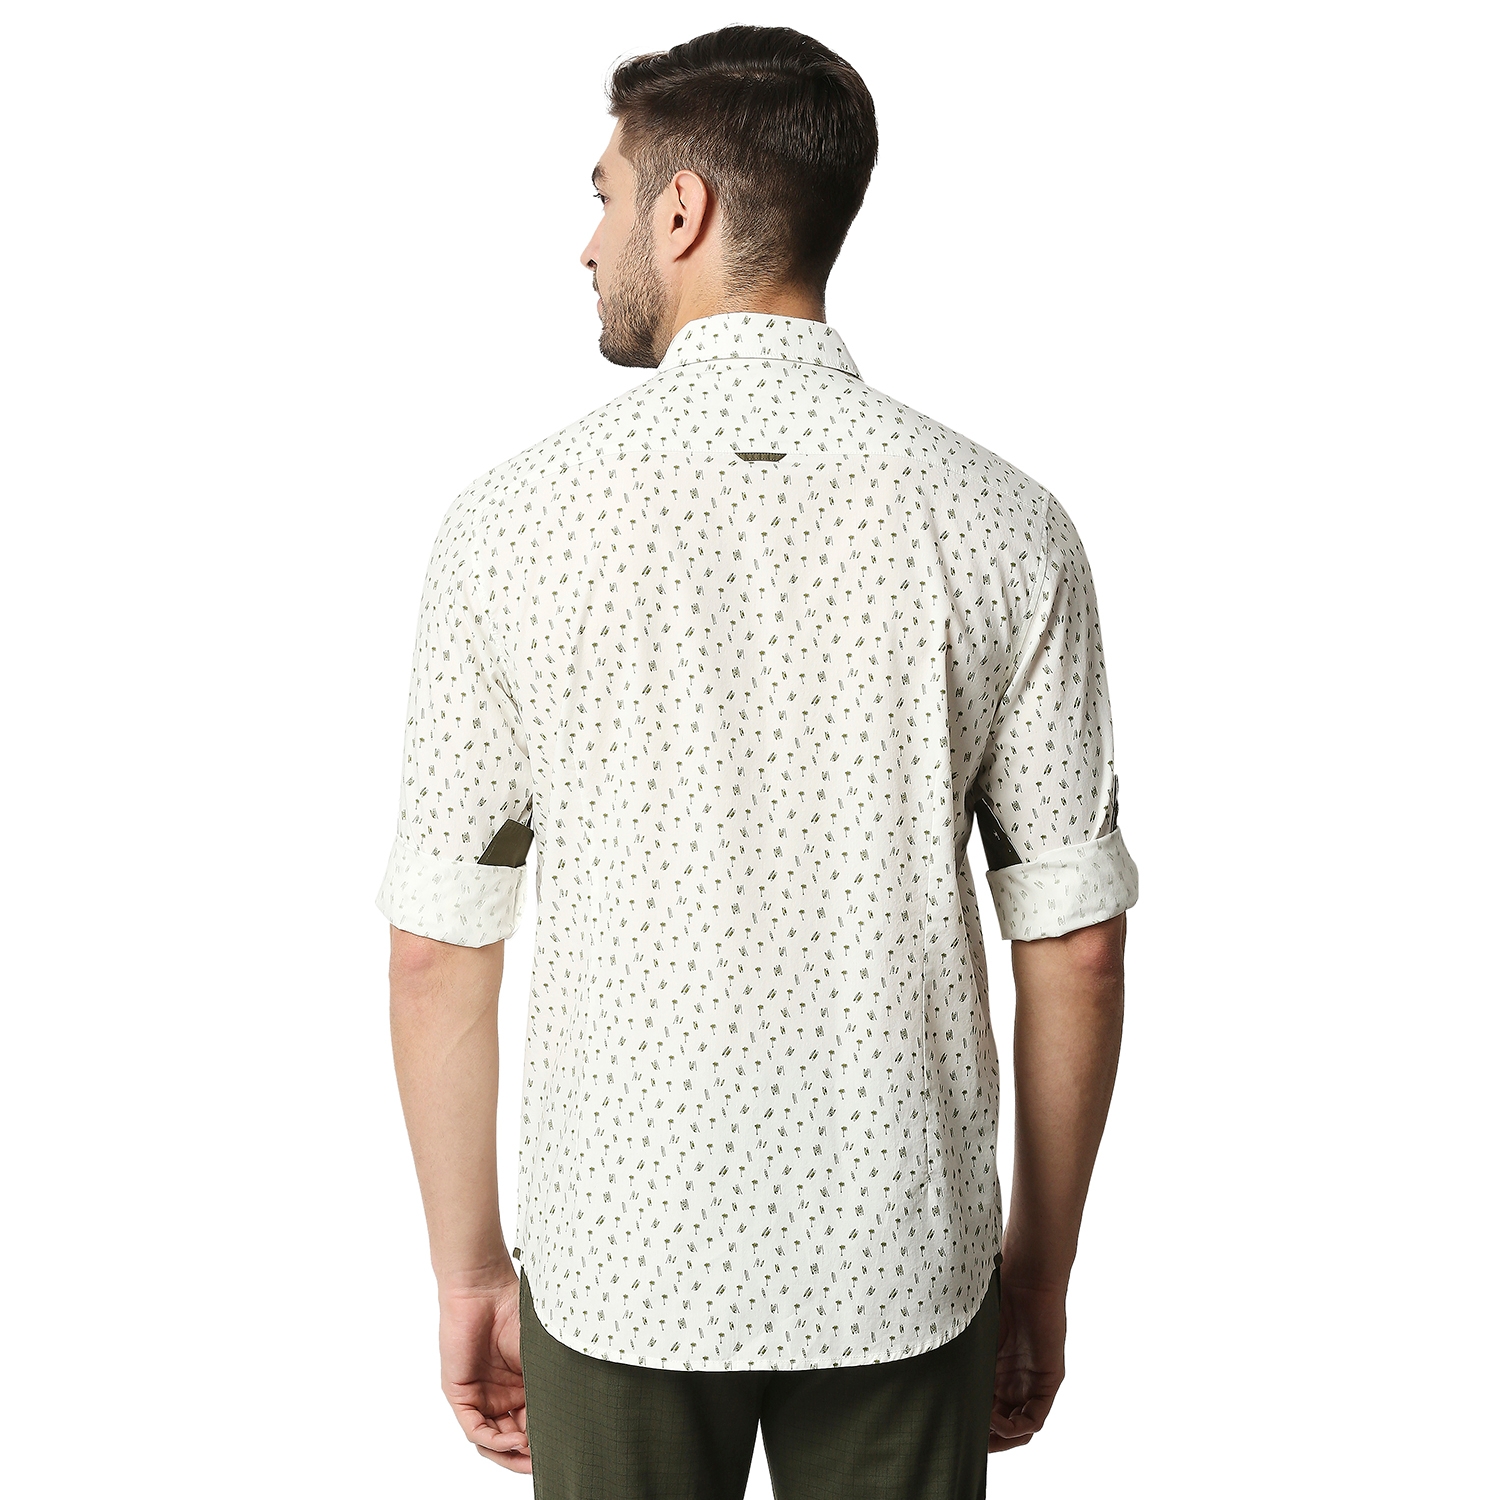 Basics | Men's Beige Cotton Printed Casual Shirt 1